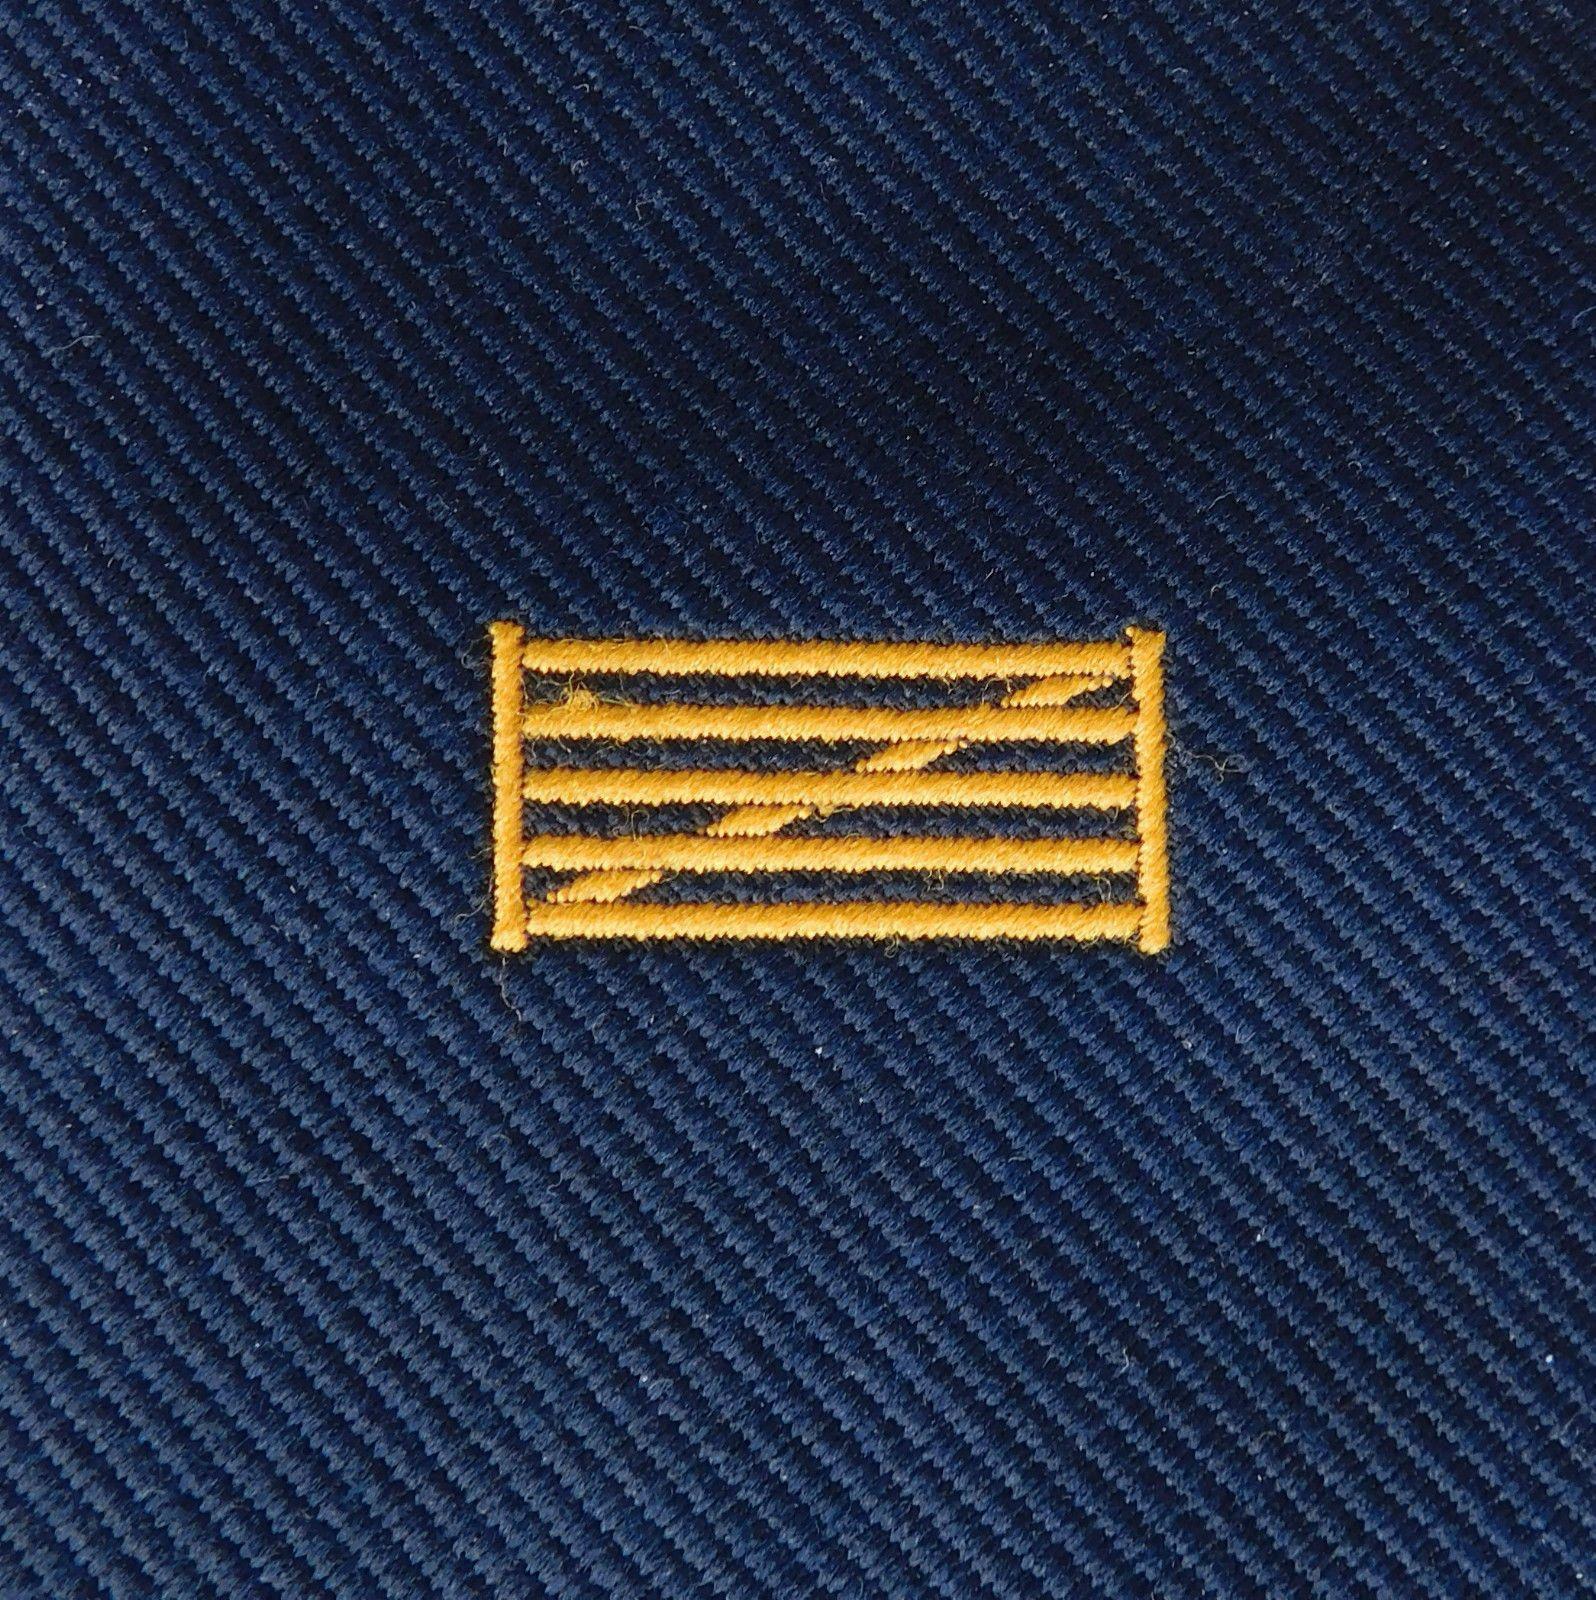 Blue Rectangle in Blue P Logo - 5 Five bar gate tie Unidentified company club emblem logo 1970s ...